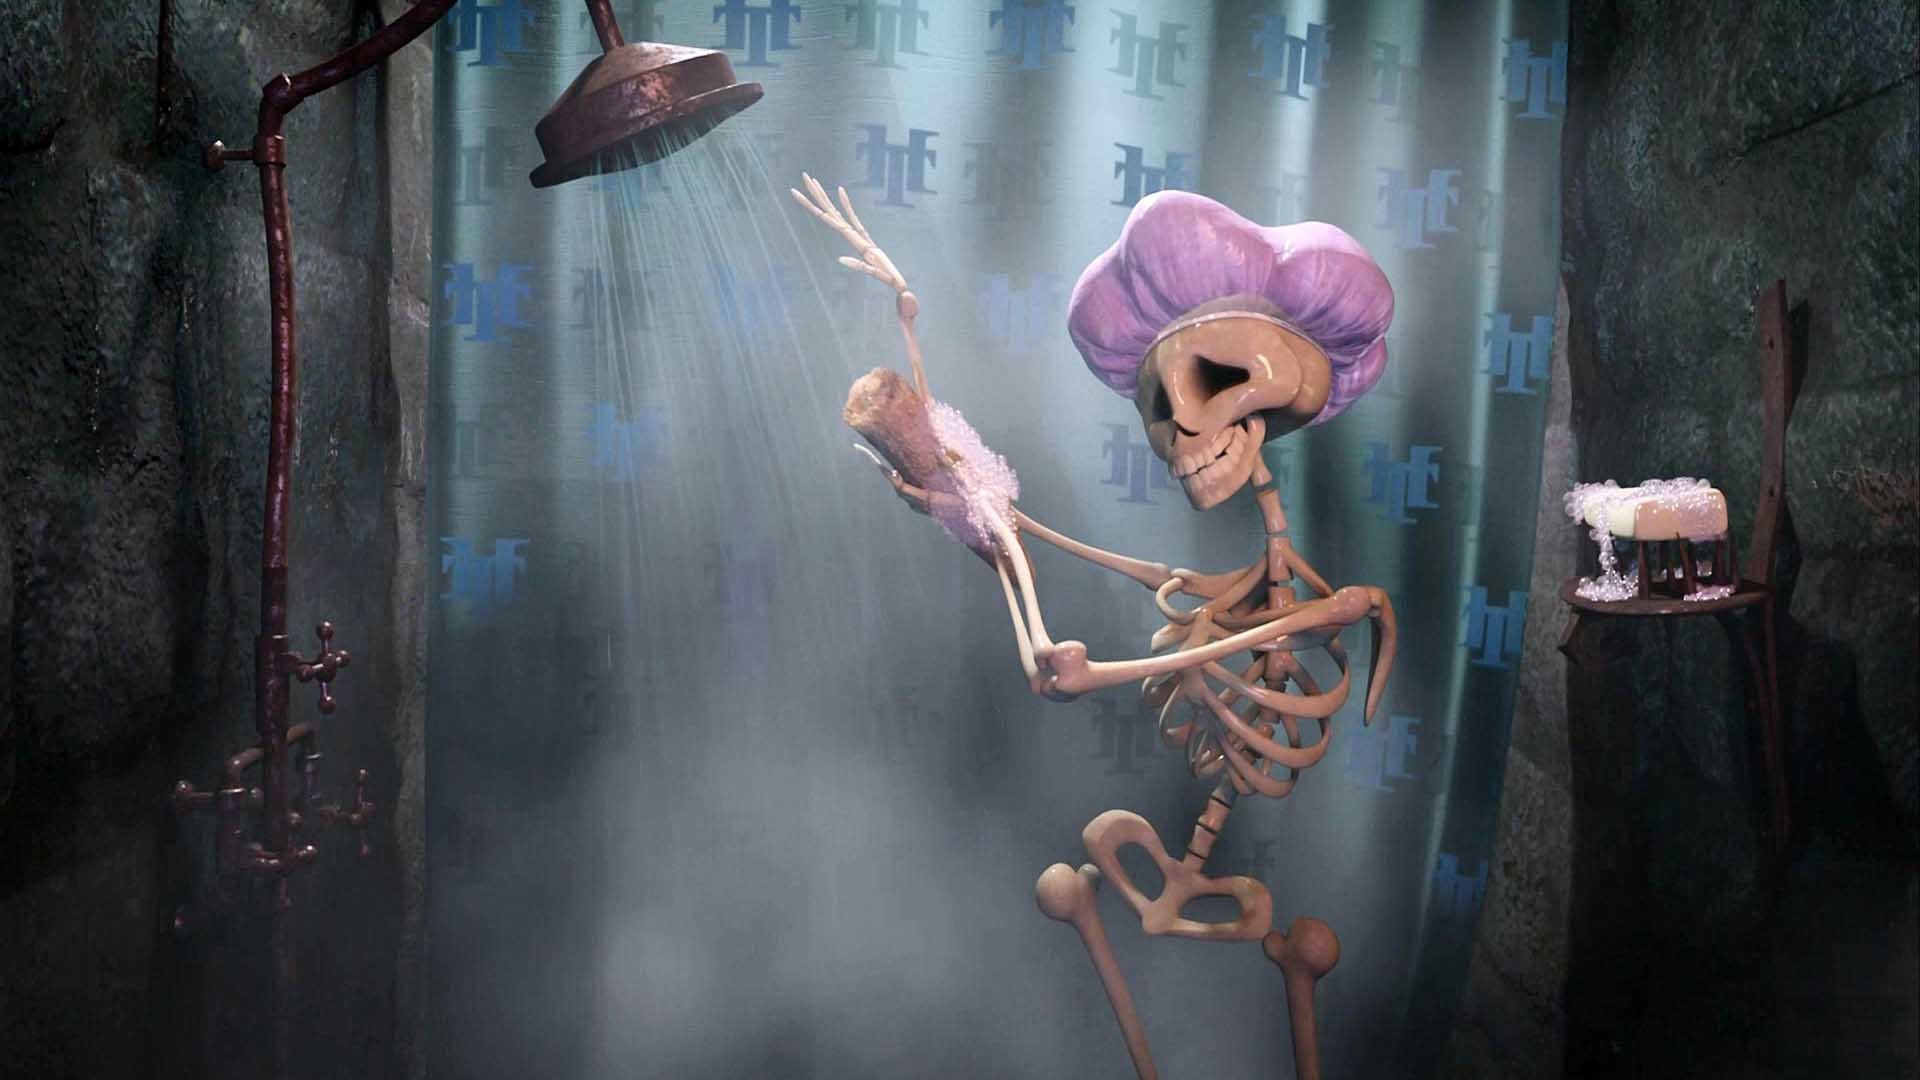 Funny skeletion creepy halloween wallpaper full hd – The Holiday. Funny Skeletion Creepy Halloween Wallpaper Full Hd The Holiday